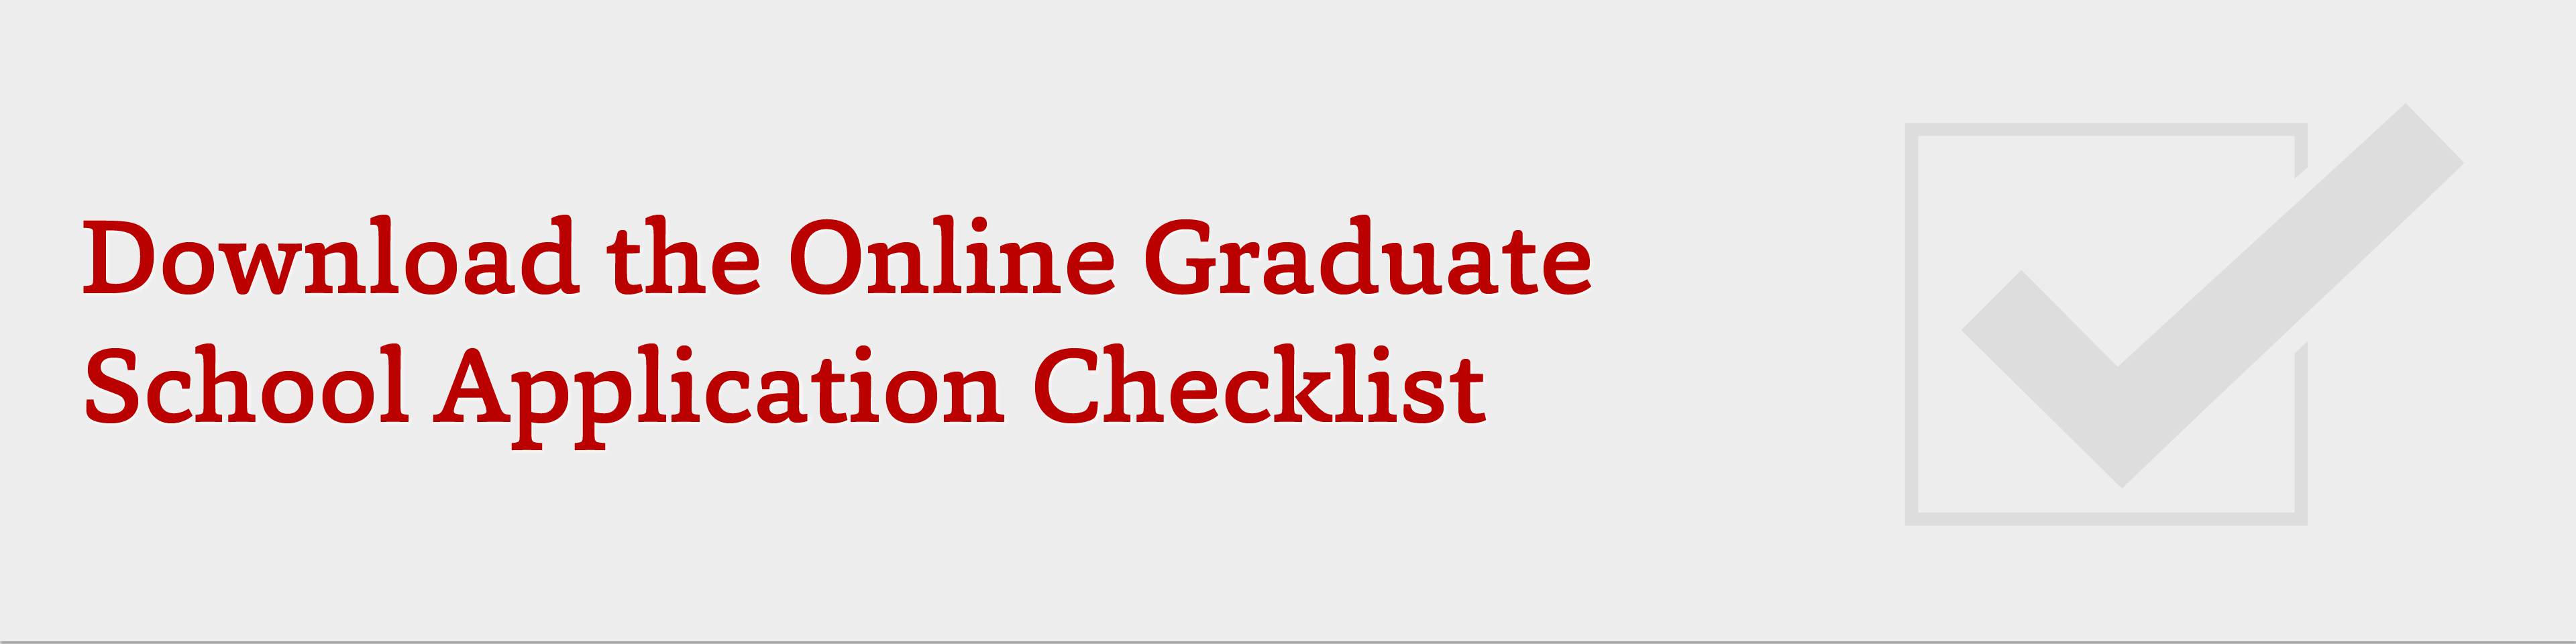 Download the online graduate school application checklist.